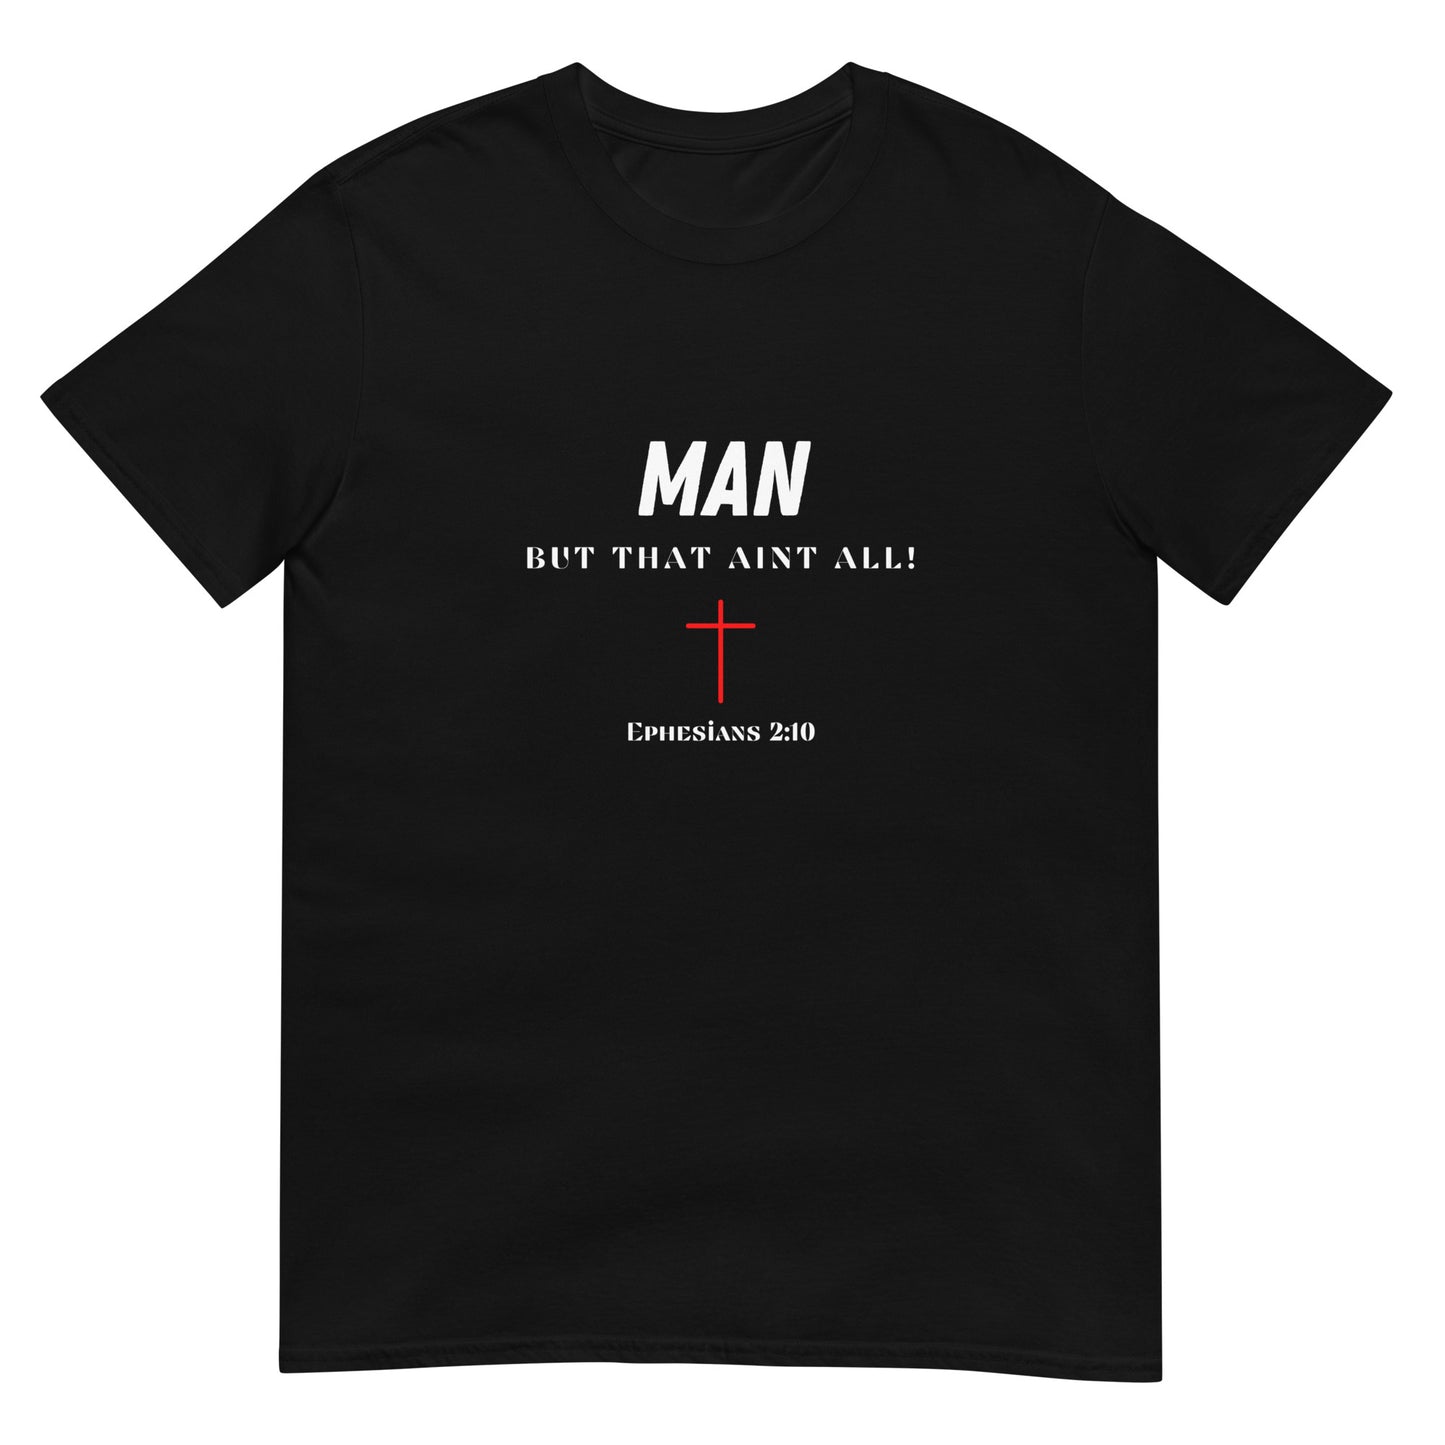 Man (Masterpiece Collection)